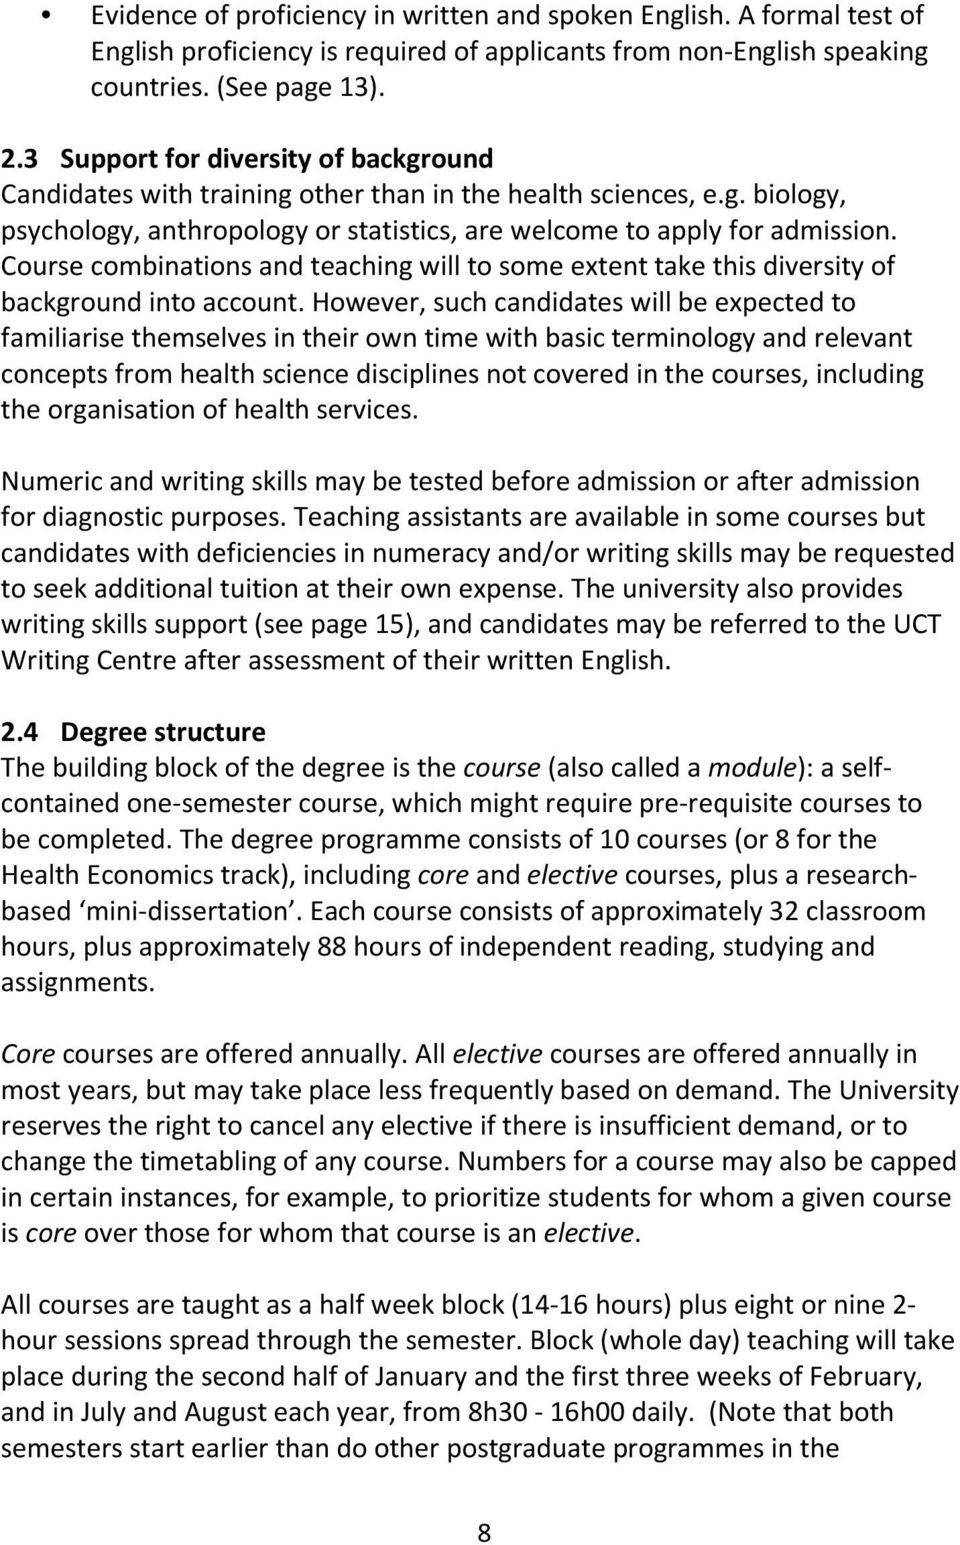 Rutgers Admissions Essay Sample